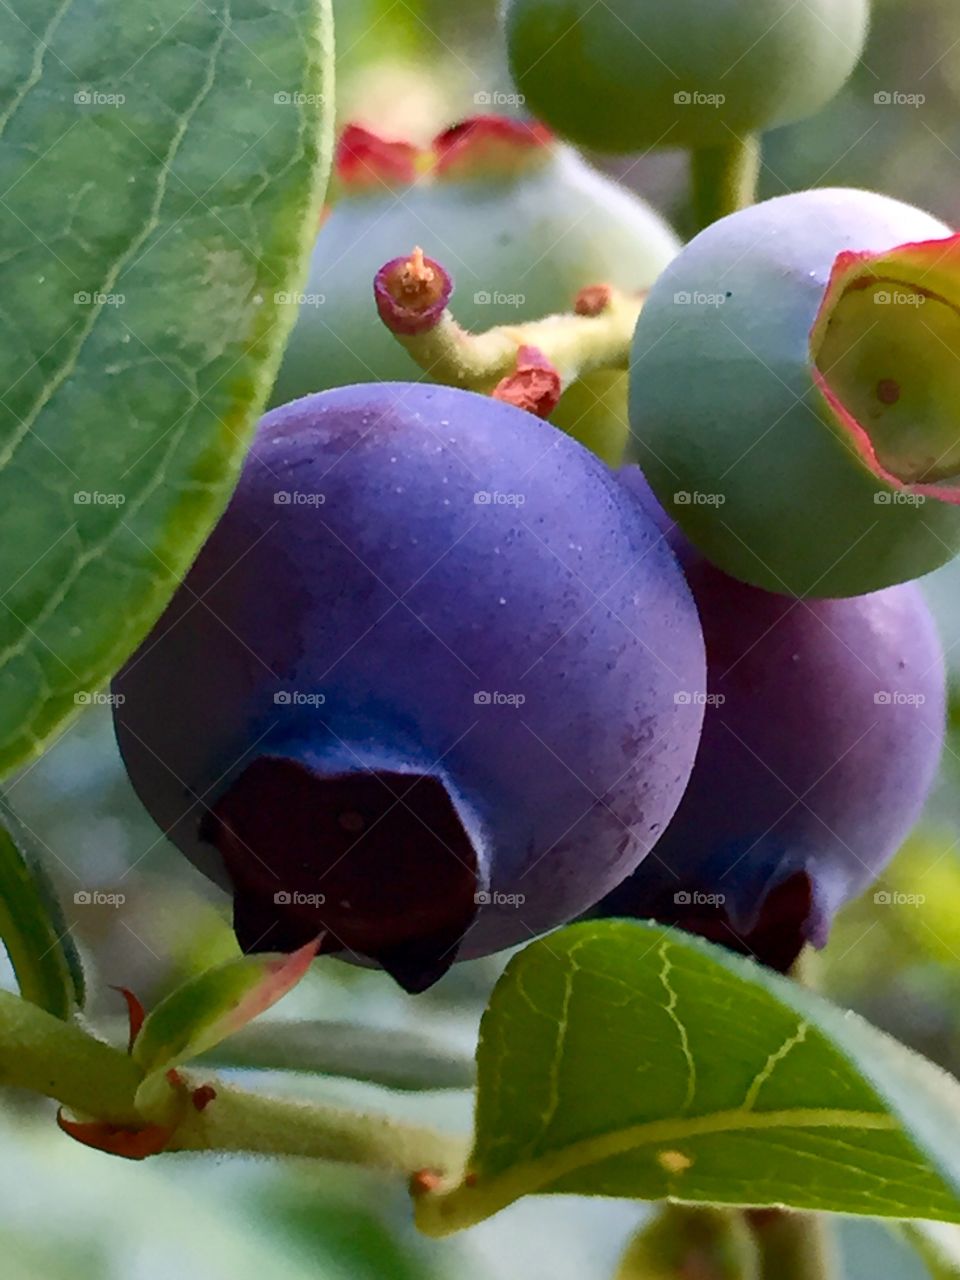 Plumping blueberries